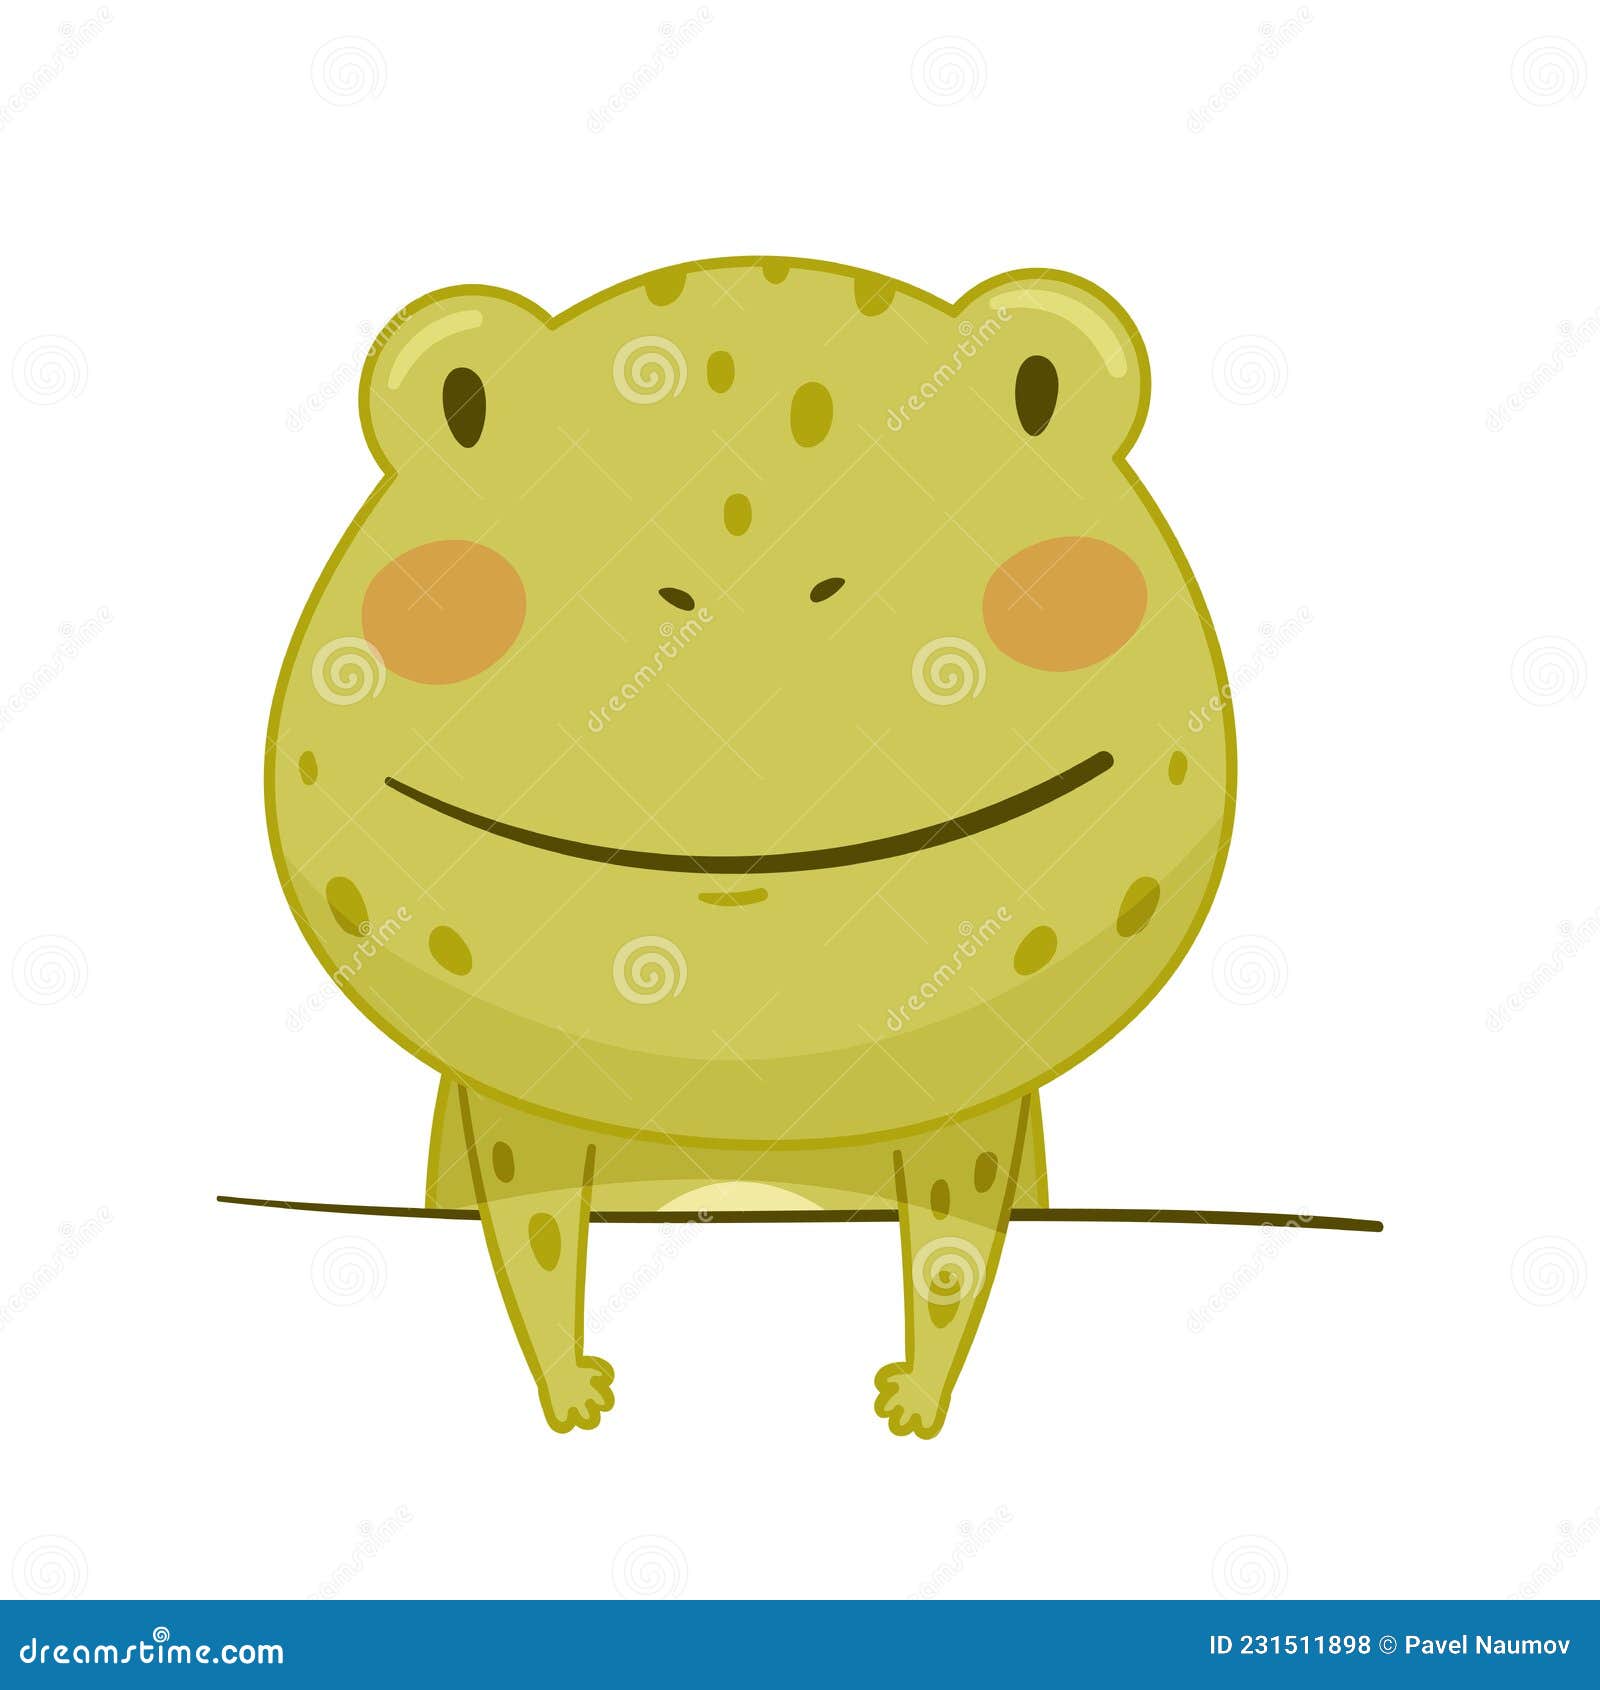 青蛙GIF表情包-青蛙GIF动图-包图网